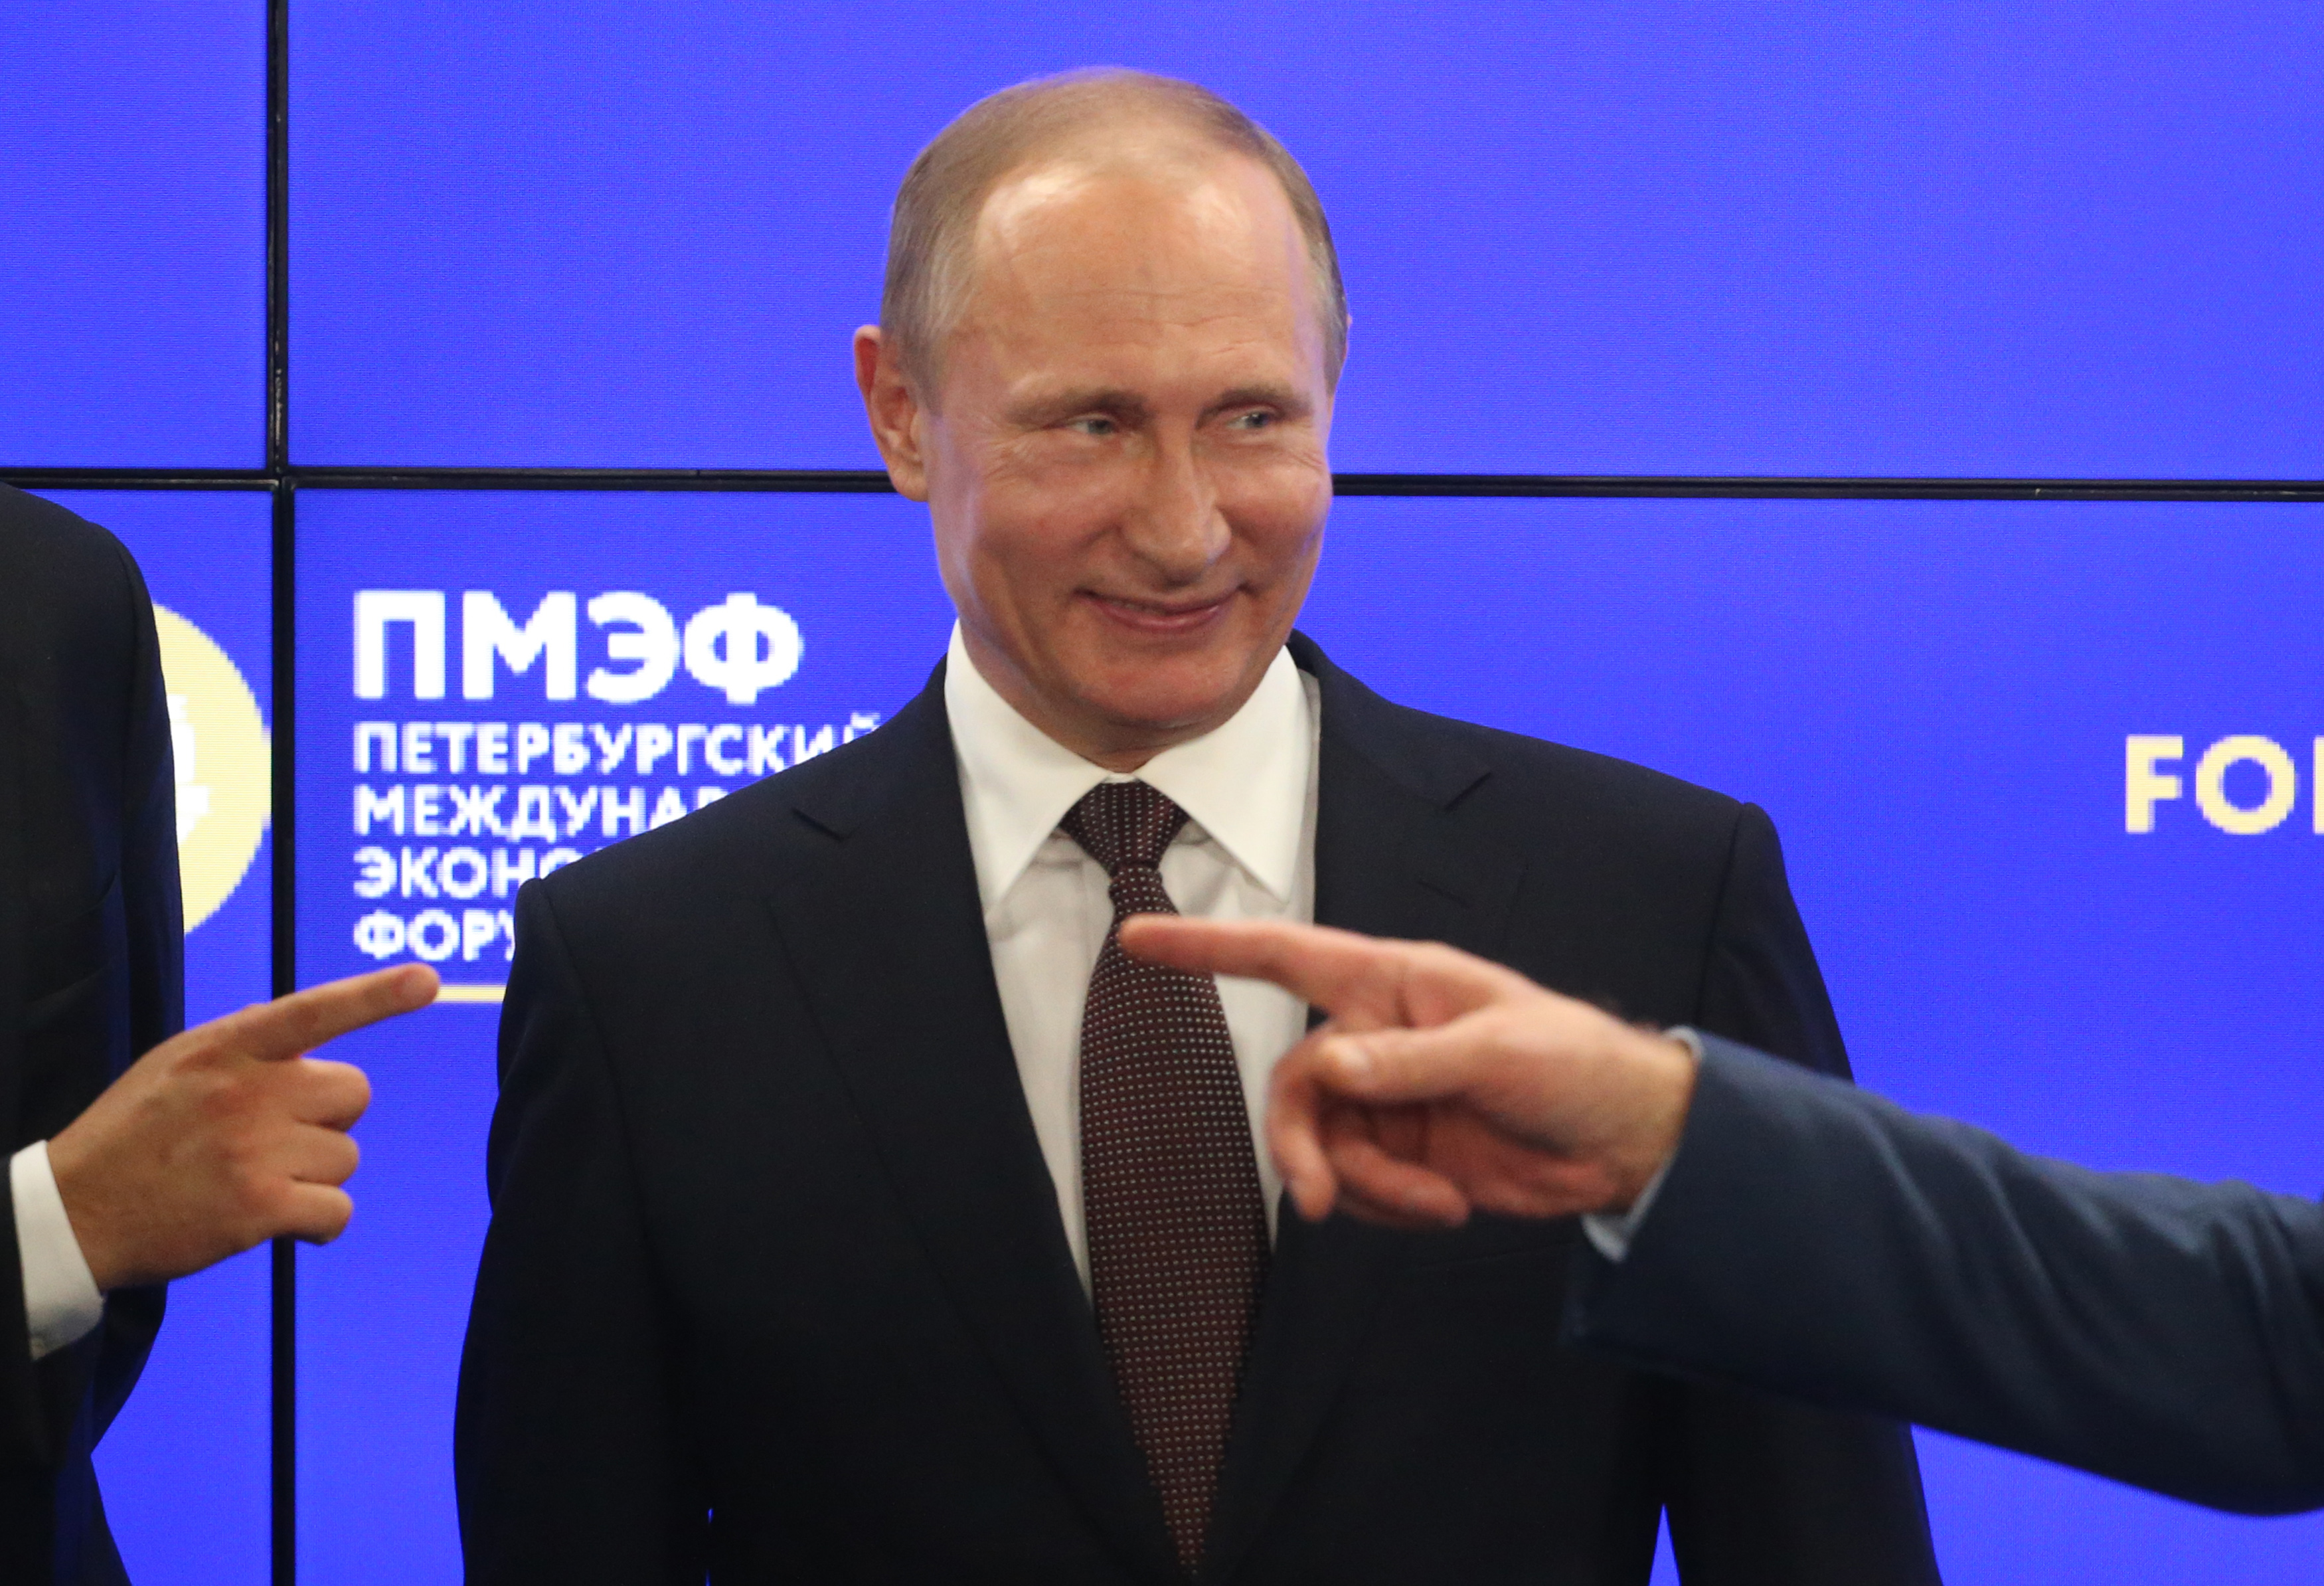 Russian President Vladimir Putin seen during the St. Petersburg International Economic Forum on June 17, 2016, in St. Petersburg (Mikhail Svetlov/Getty Images)